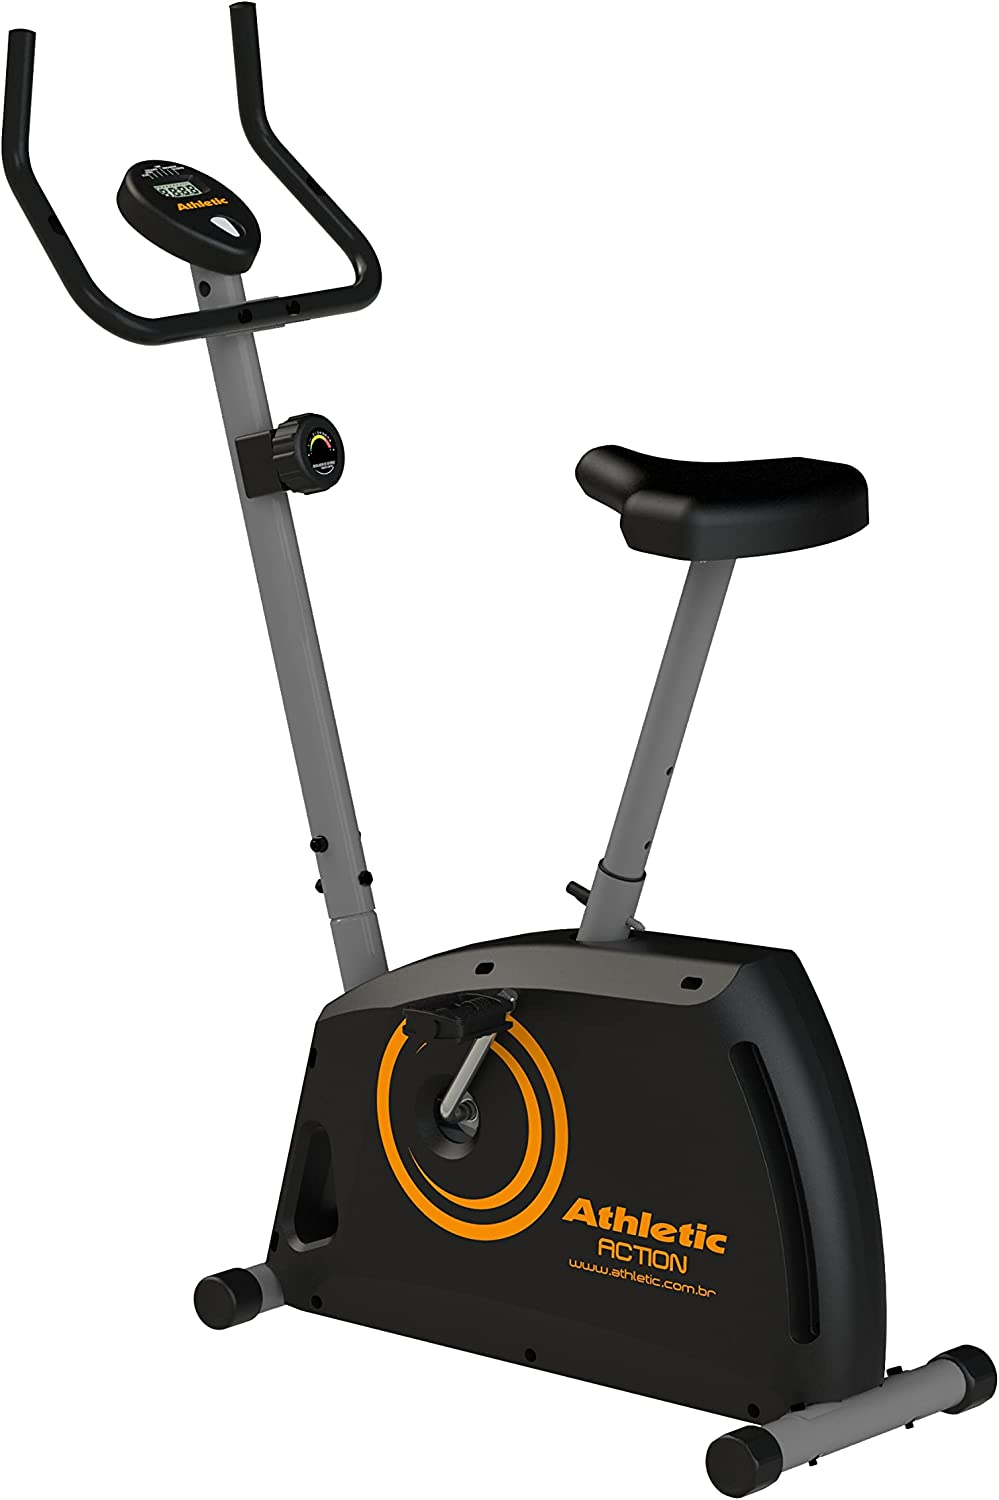 Bicicleta Ergométrica Athletic Action Vertical - Fonte: Amazon.